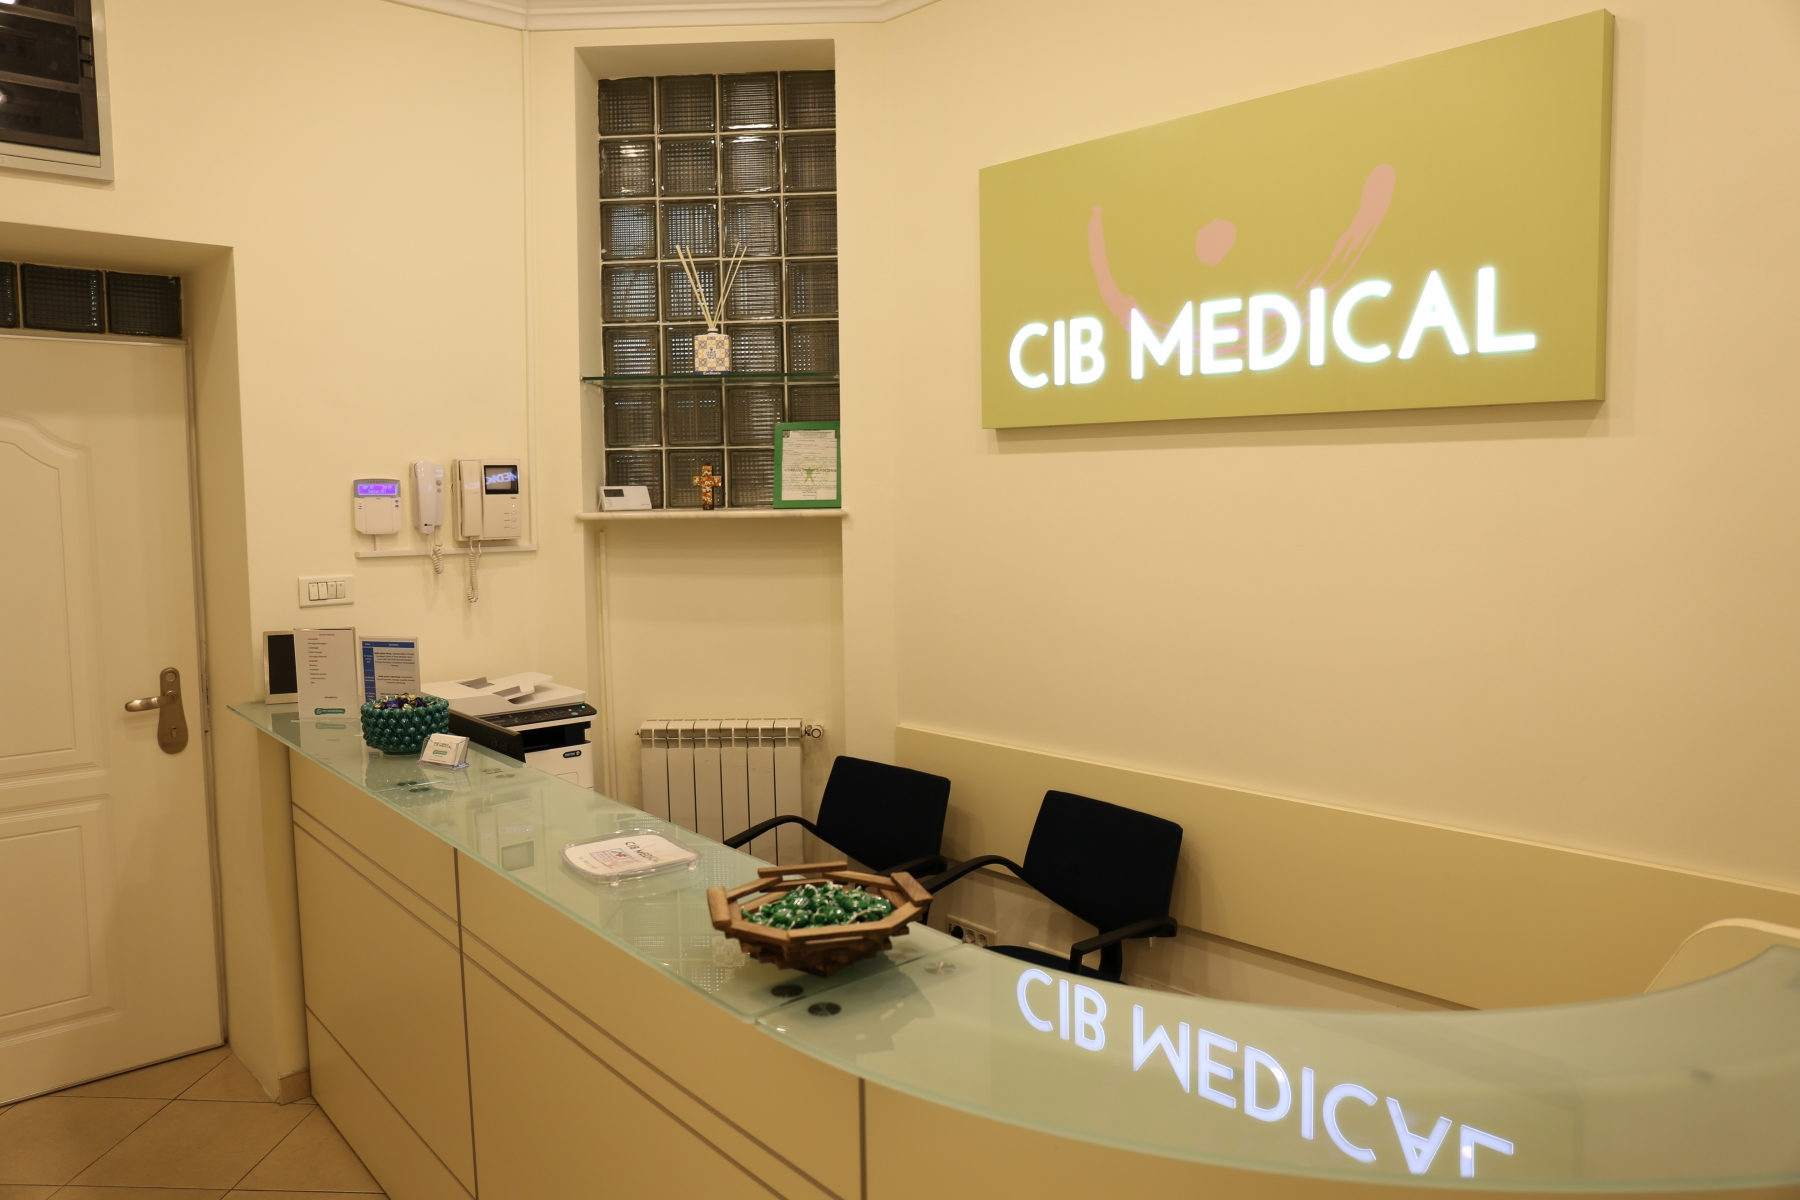 CIB MEDICAL